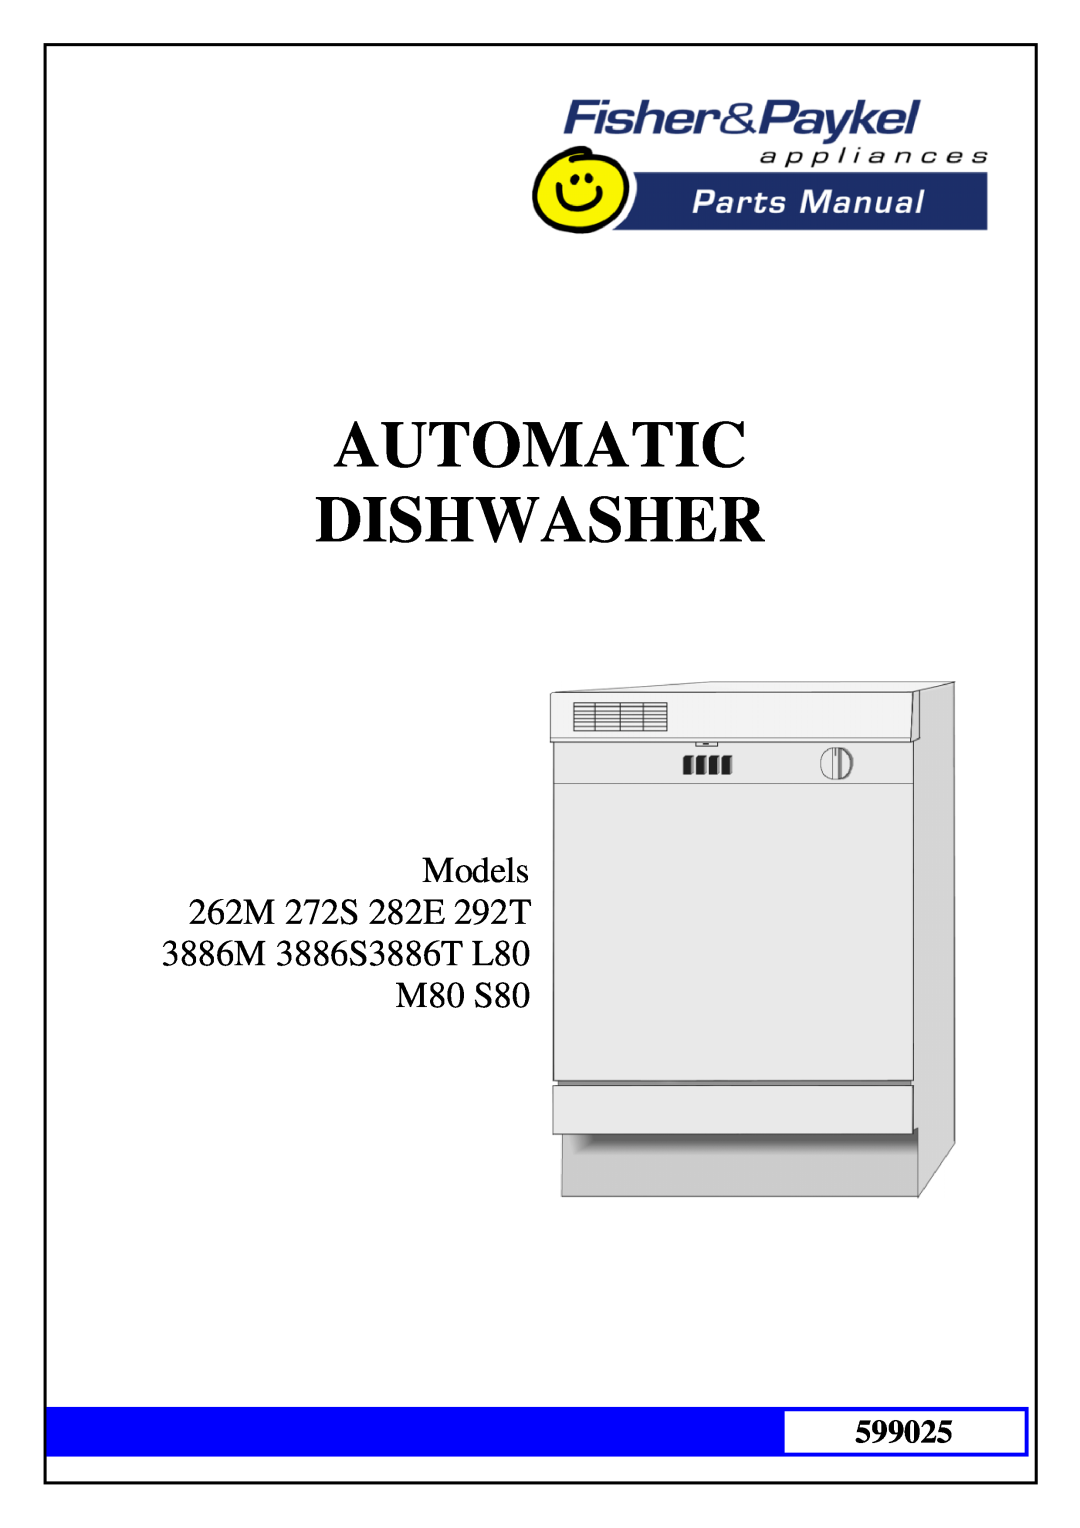 Frigidaire M80, L80, S80, 282E, 272S, 262M, 3886T, 3886M, 3886S, 292T manual Automatic Dishwasher, 599025 